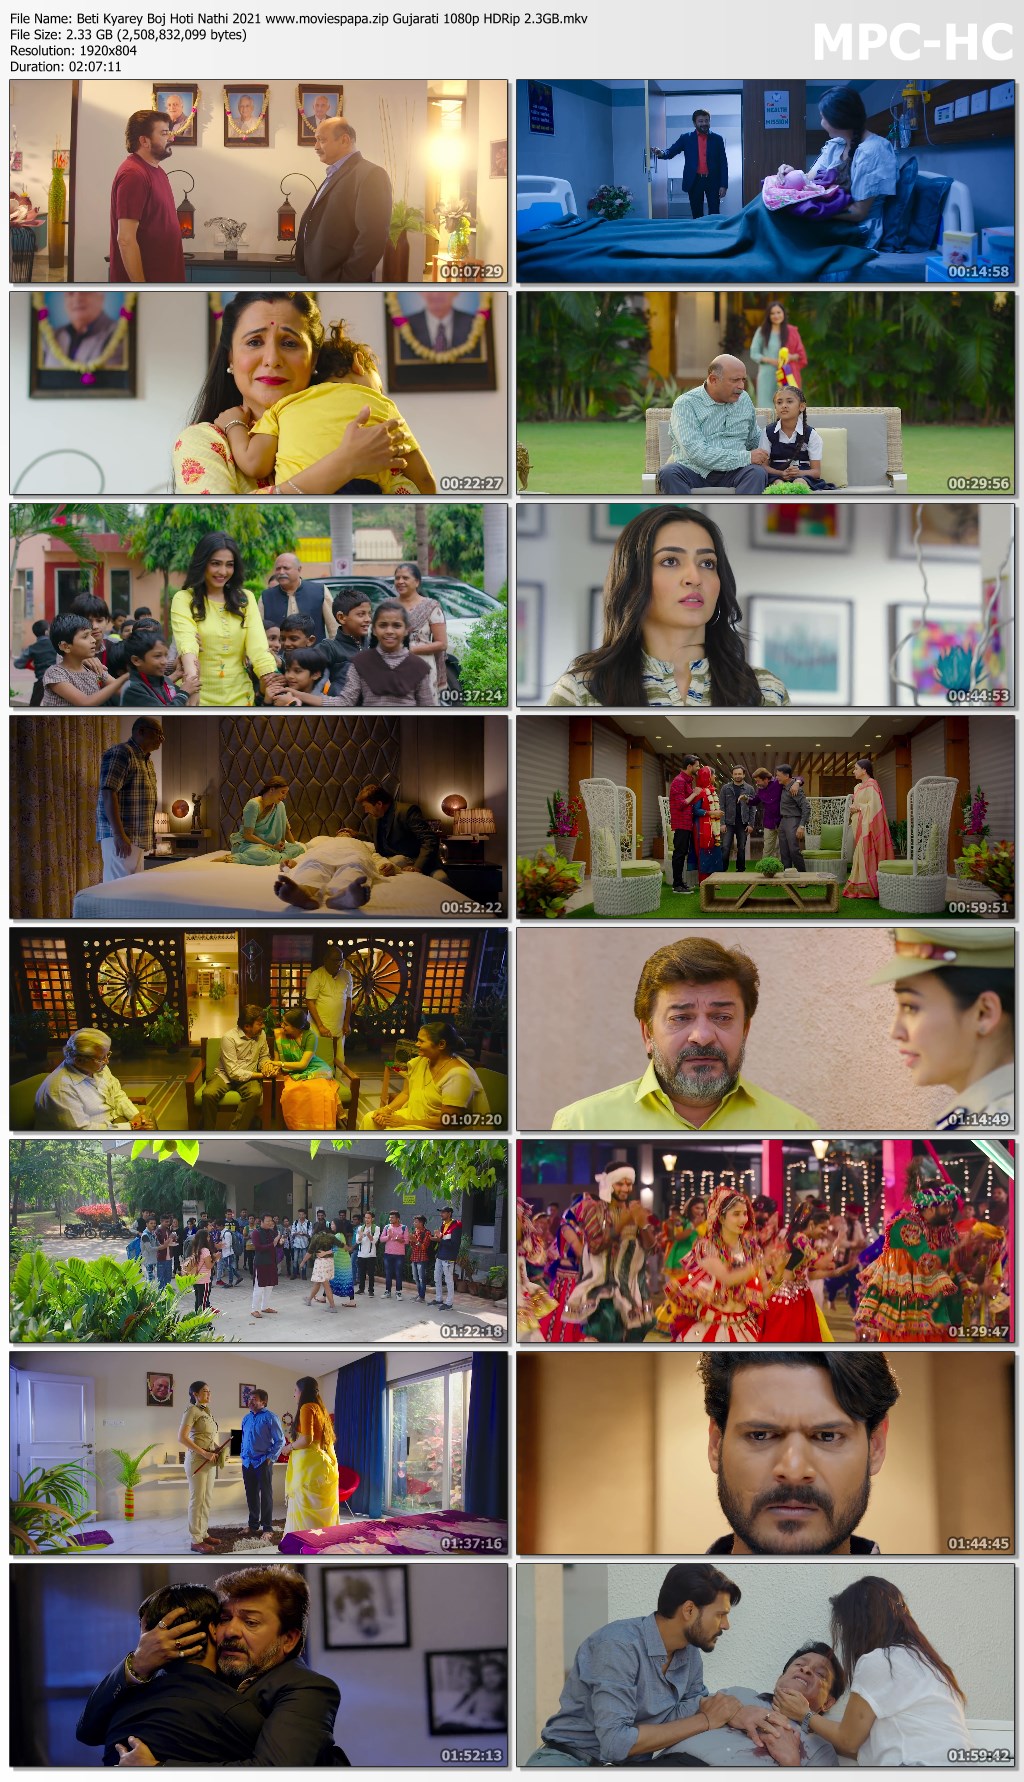 Beti Kyarey Boj Hoti Nathi 2021 www.moviespapa.zip Gujarati 1080p HDRip 2.3GB.mkv thumbs